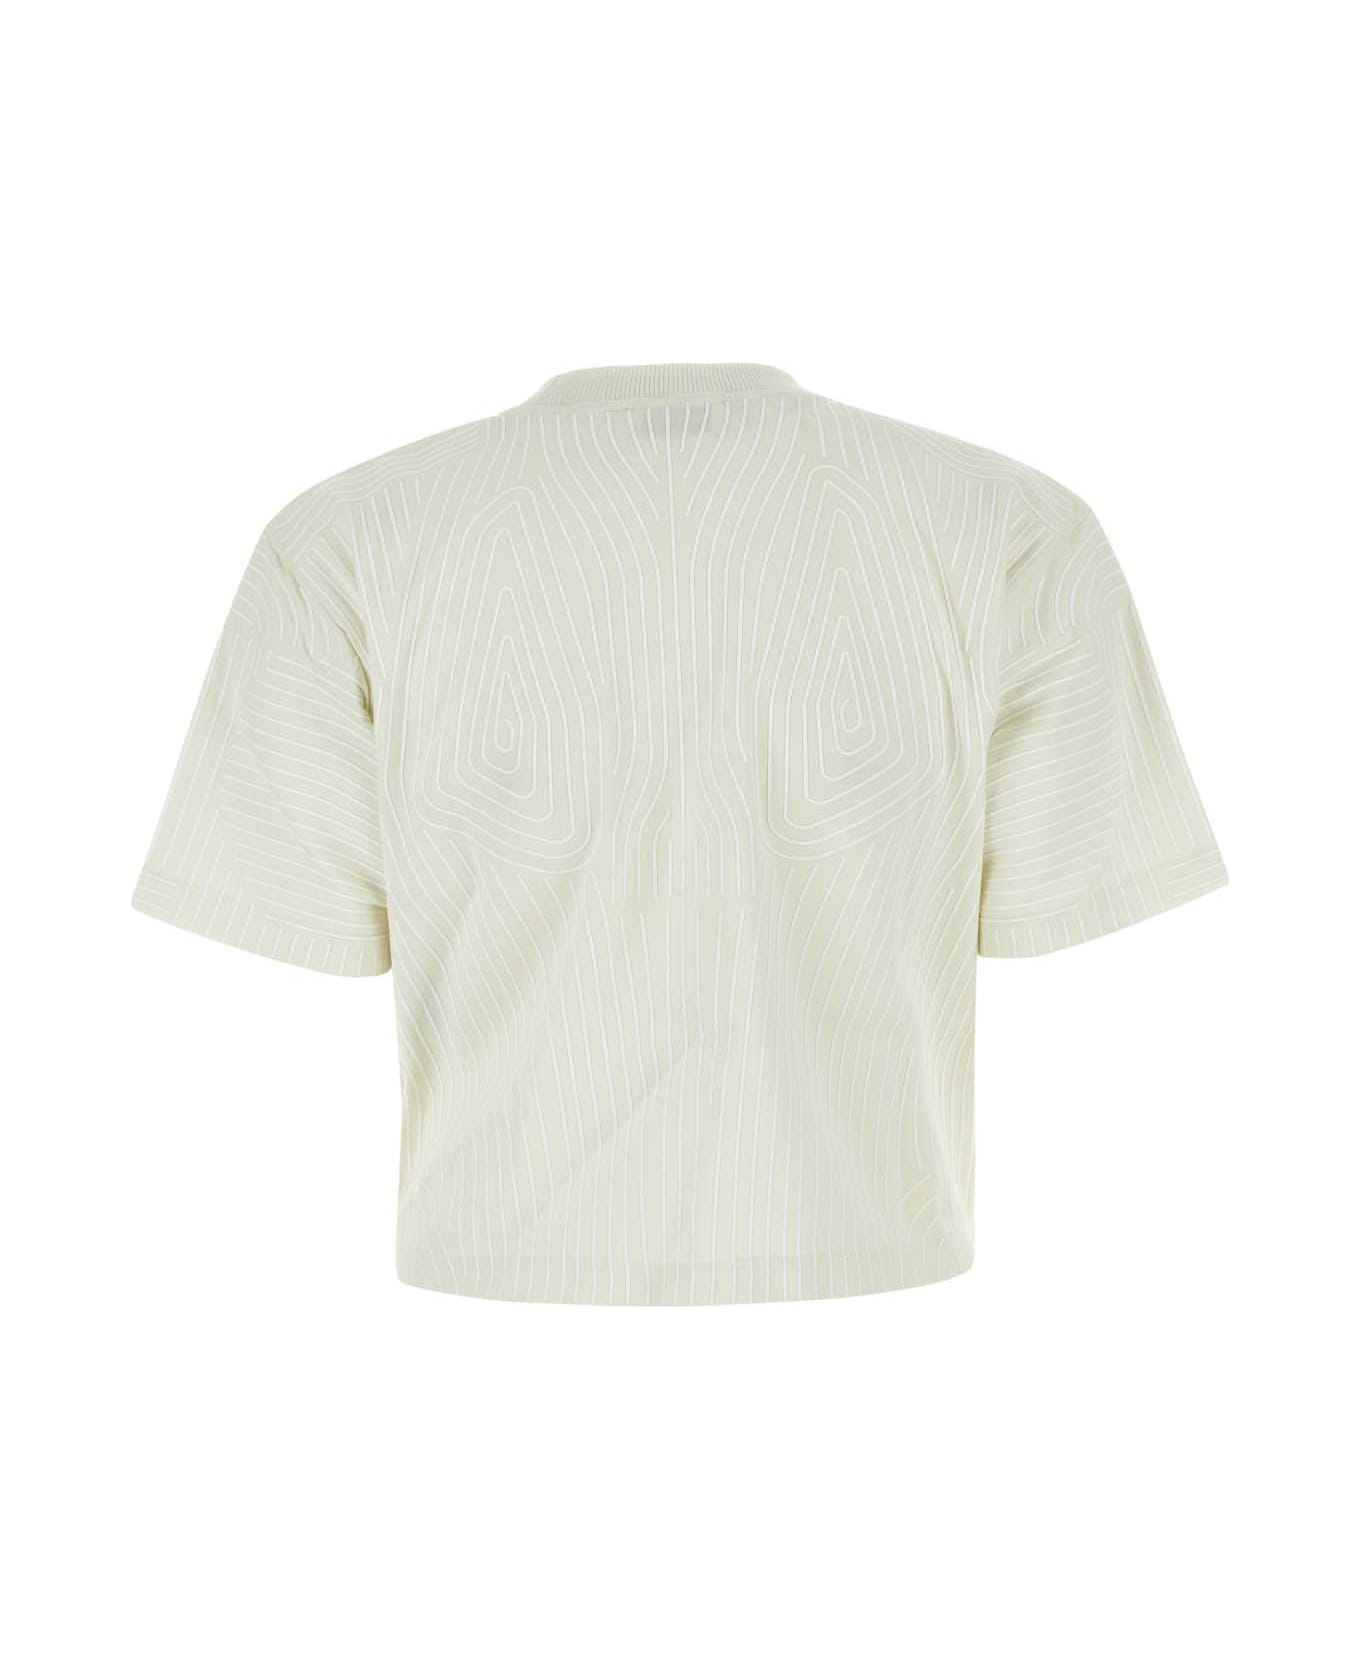 Off-White Ivory Cotton Oversize T-shirt - WHTWHT